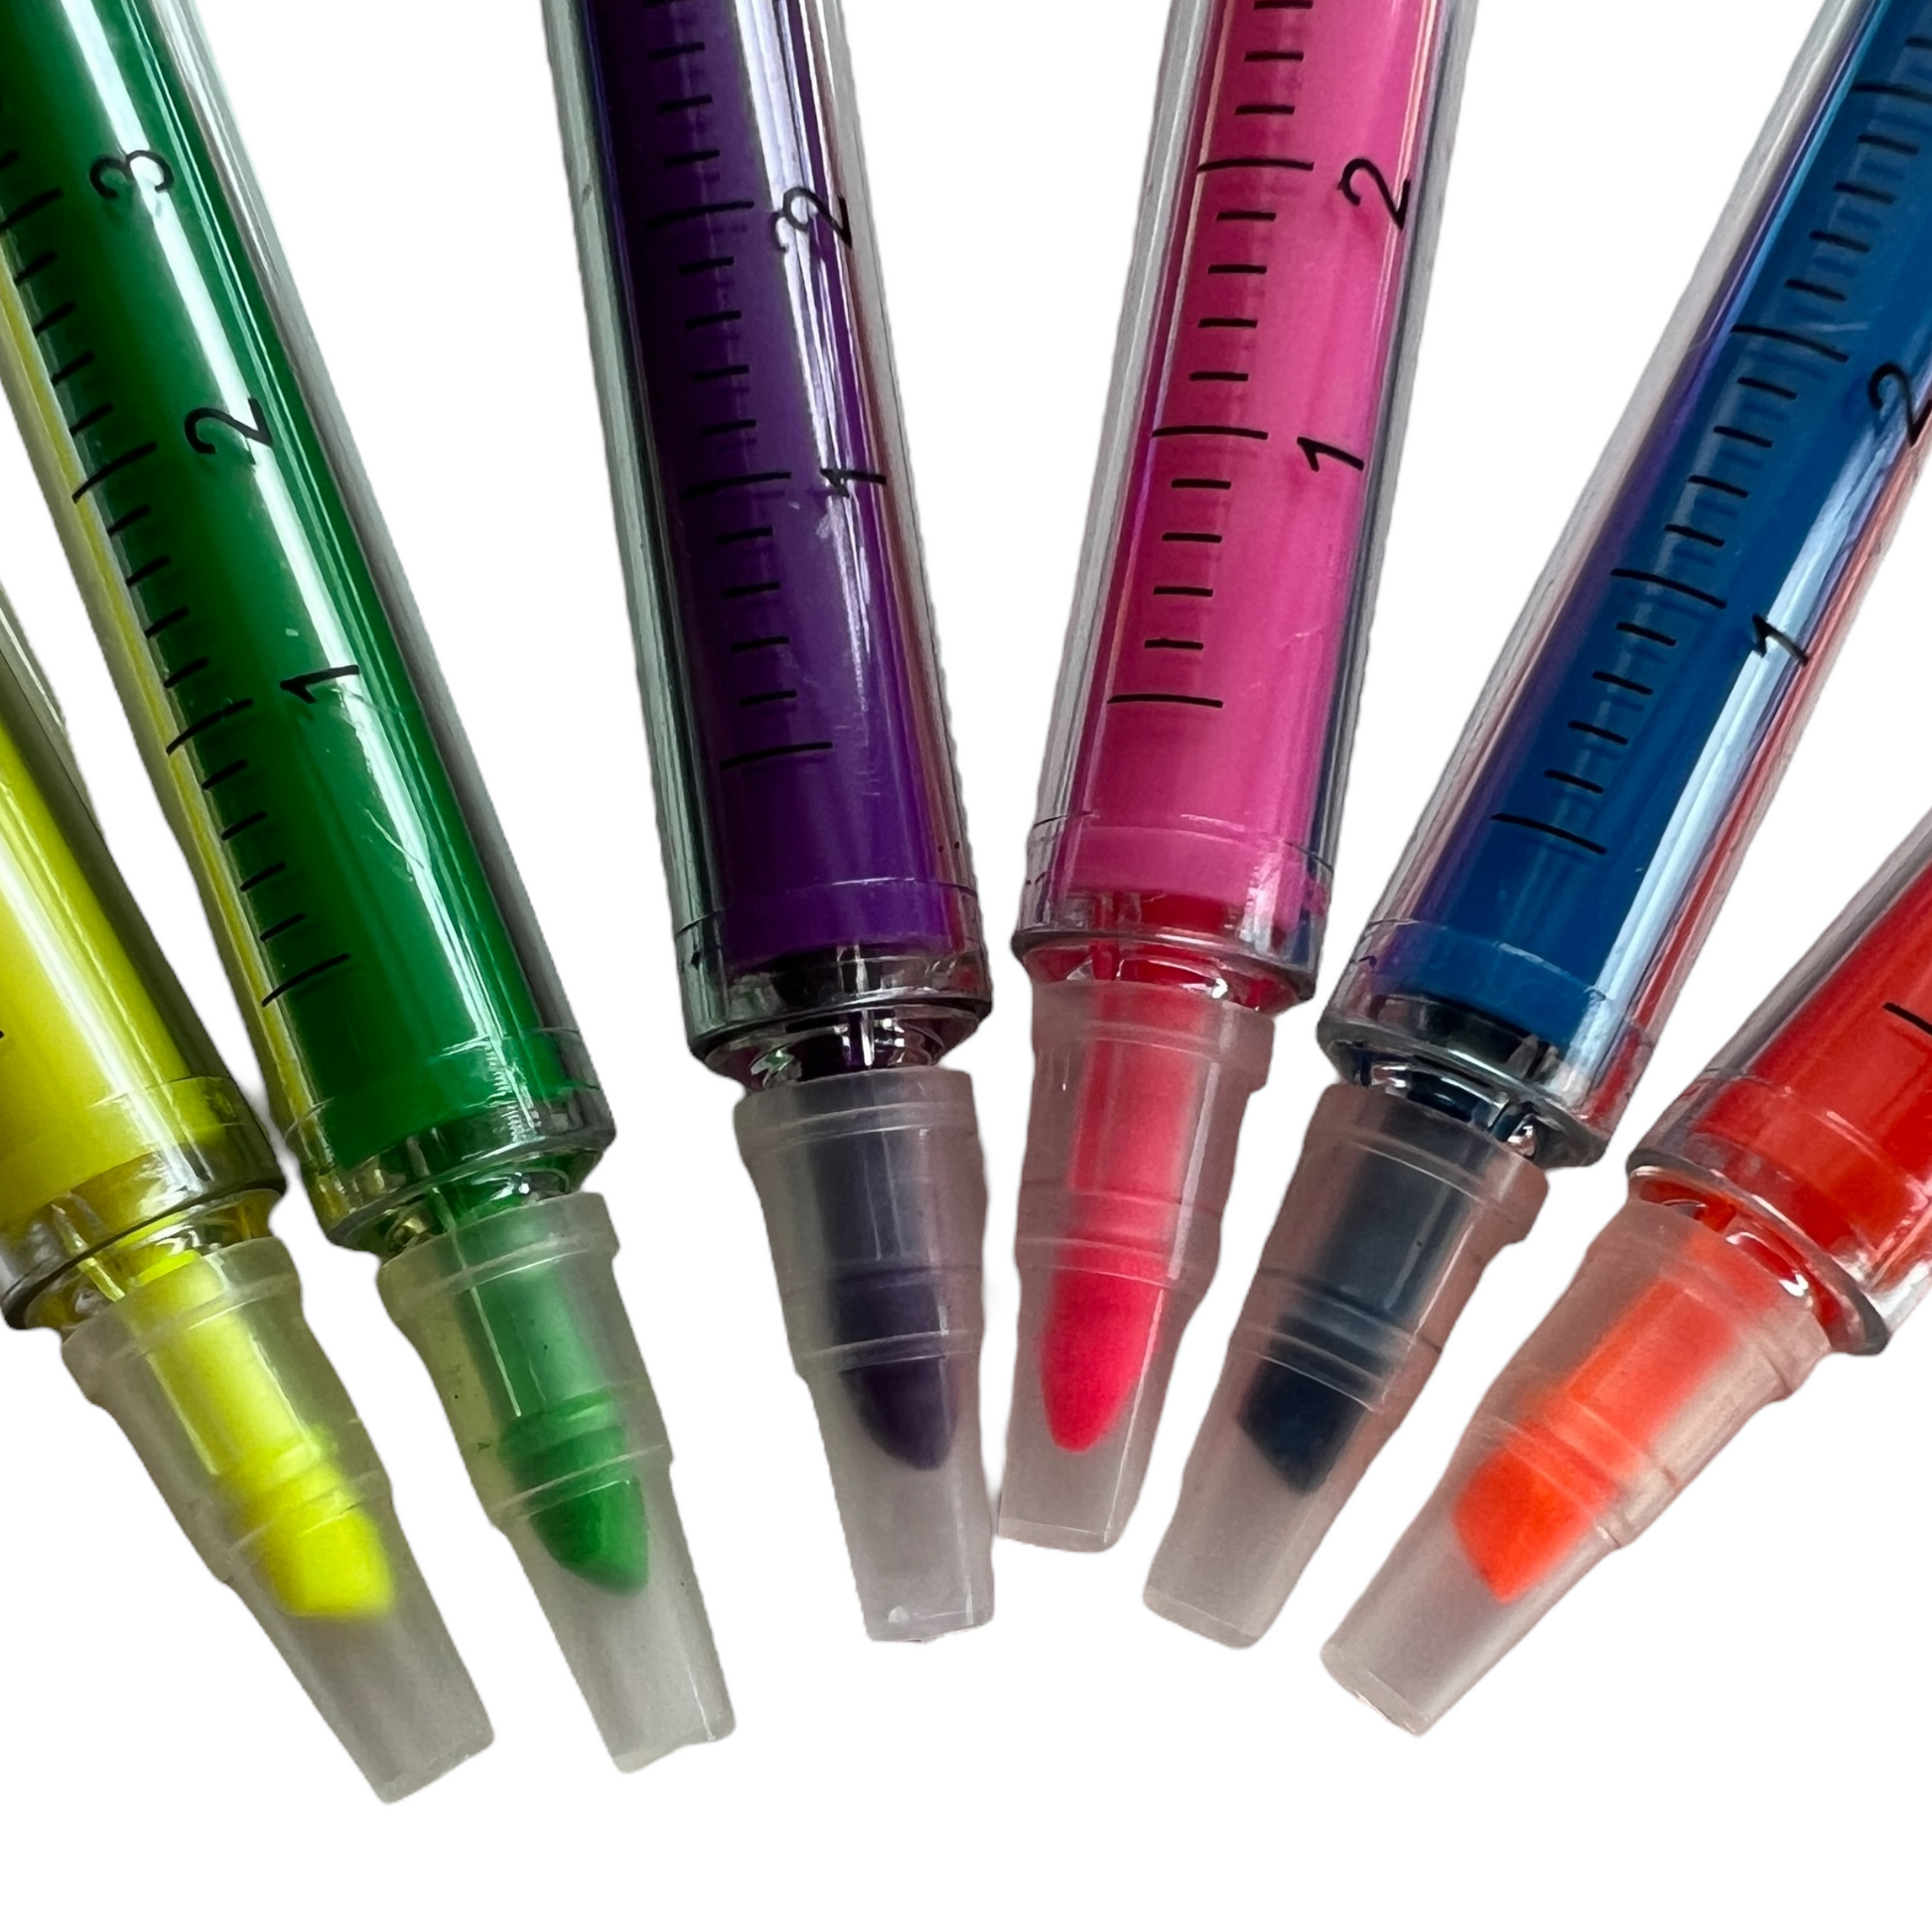 Syringe Highlighter Pens  SPIRIT SPARKPLUGS   